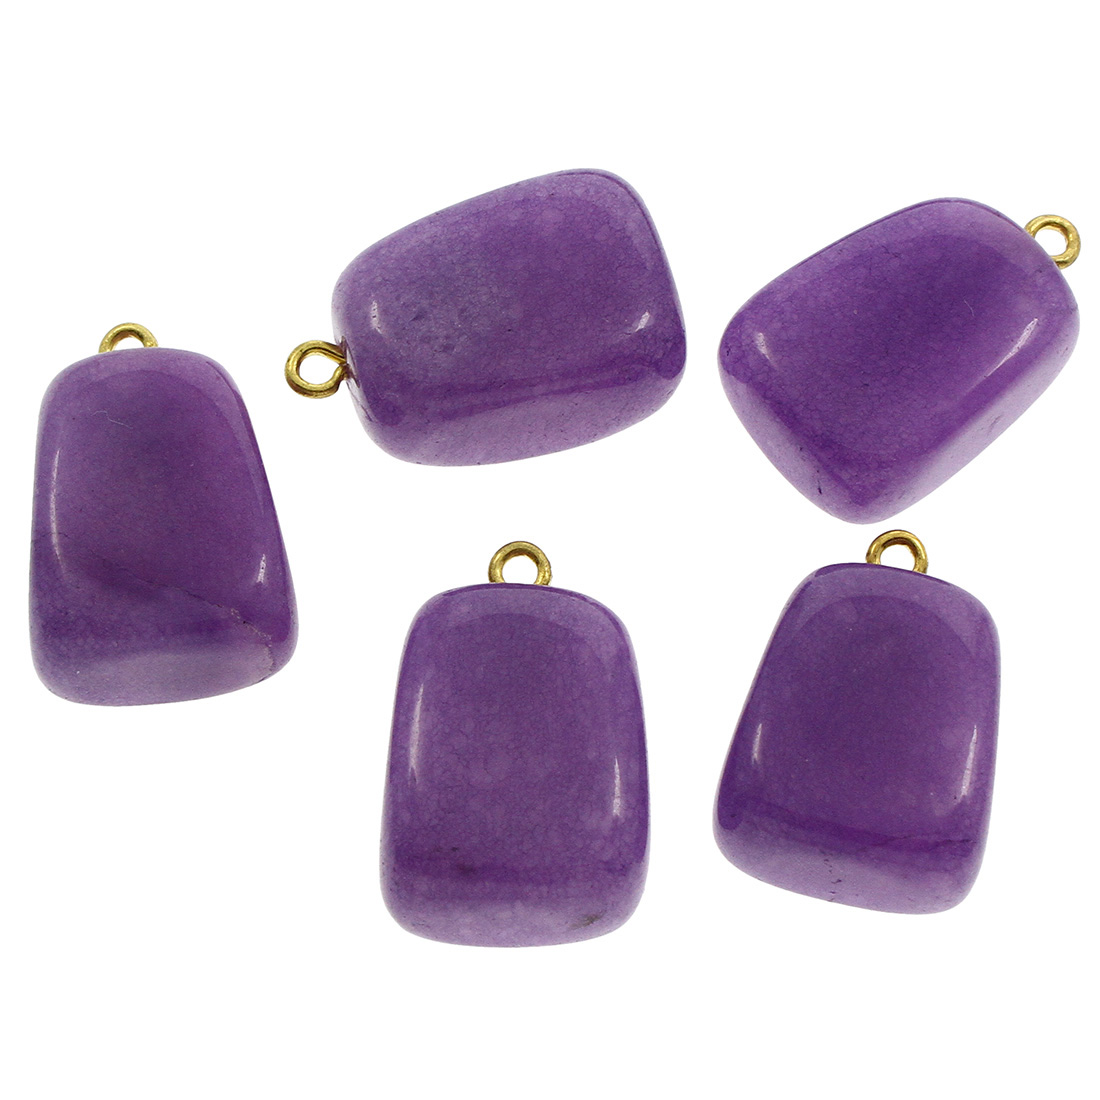 1:purple agate